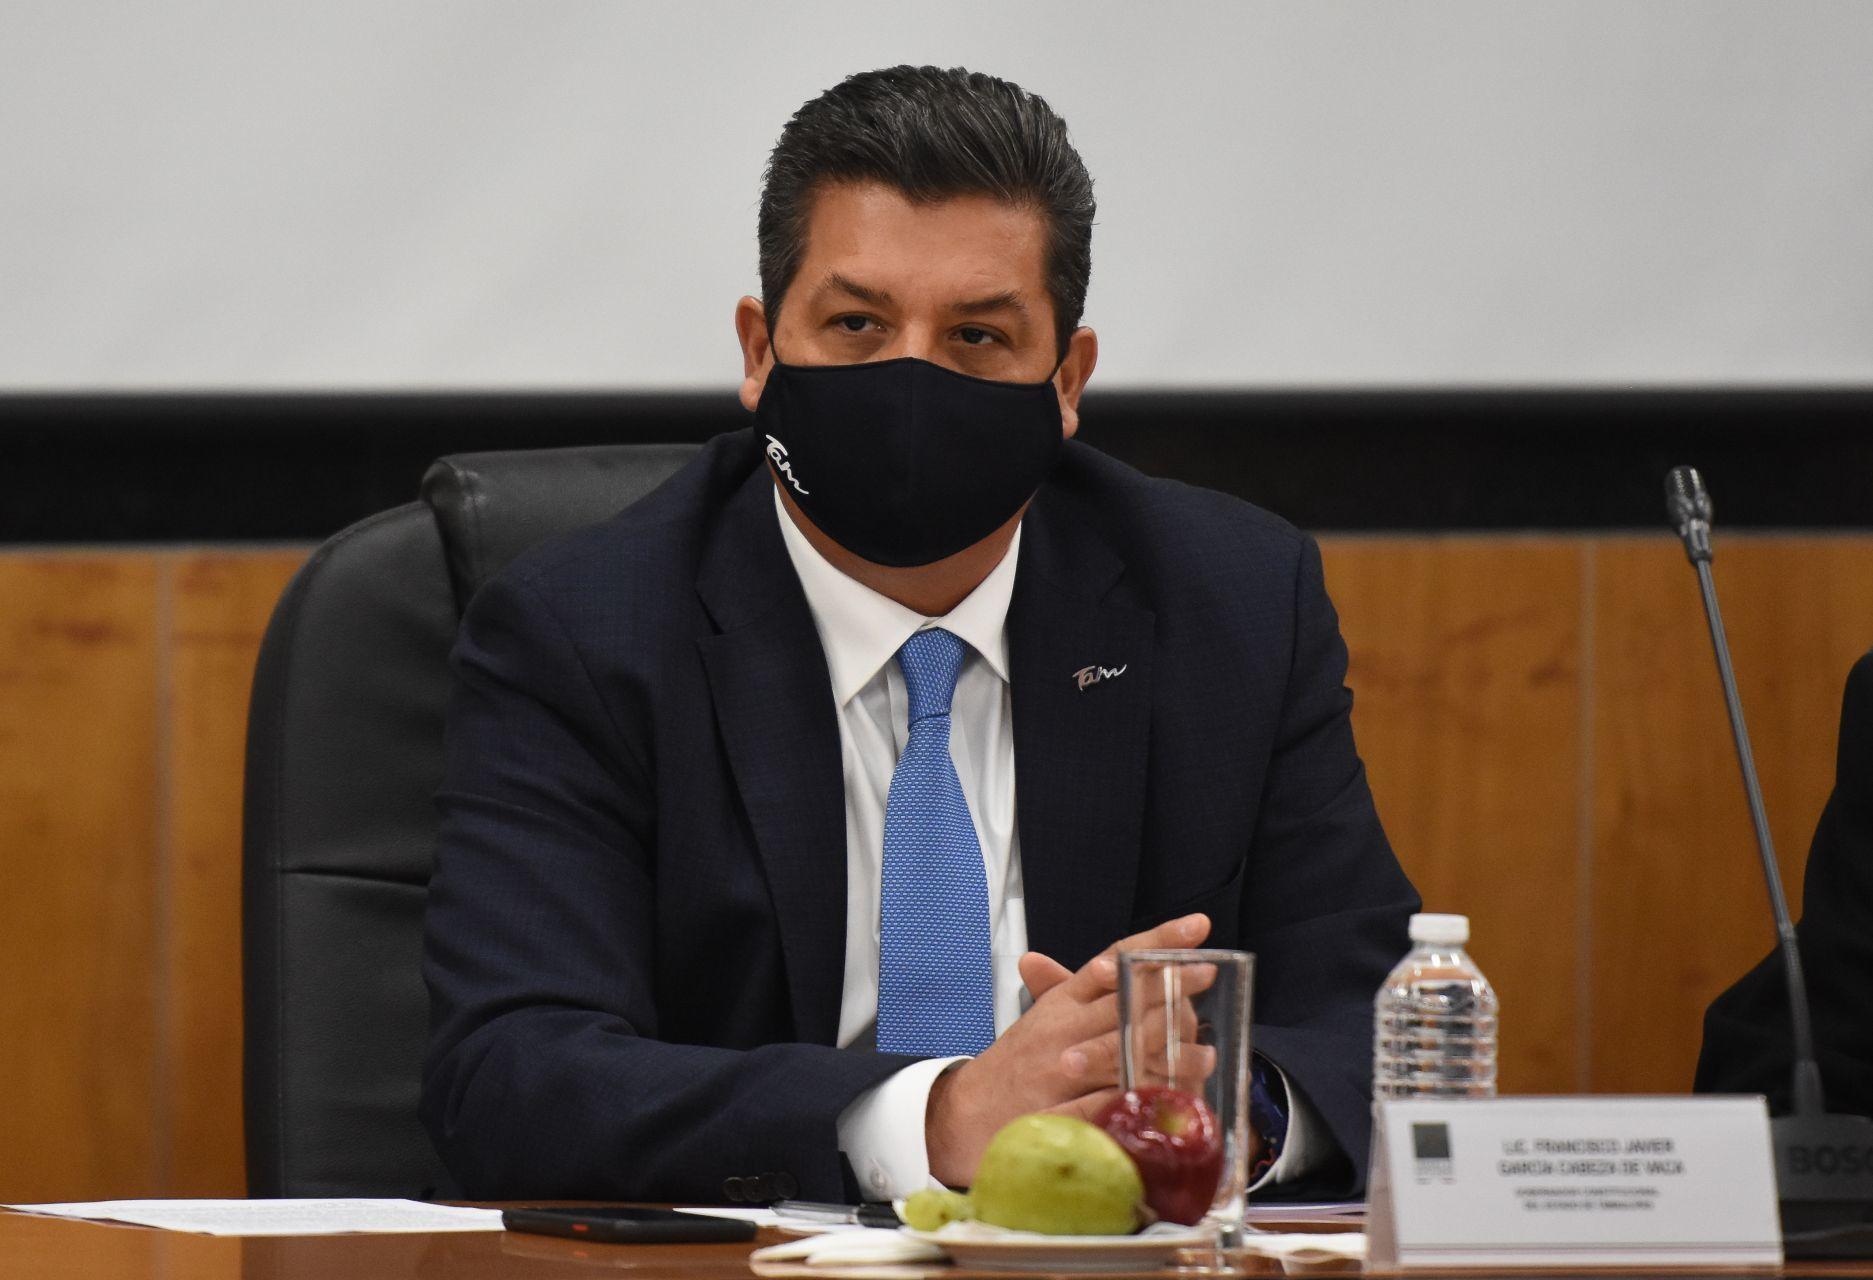 Cabeza de Vaca, gobernador de Tamaulipas, usó factureras ligadas al Cártel de Sinaloa, denuncia UIF